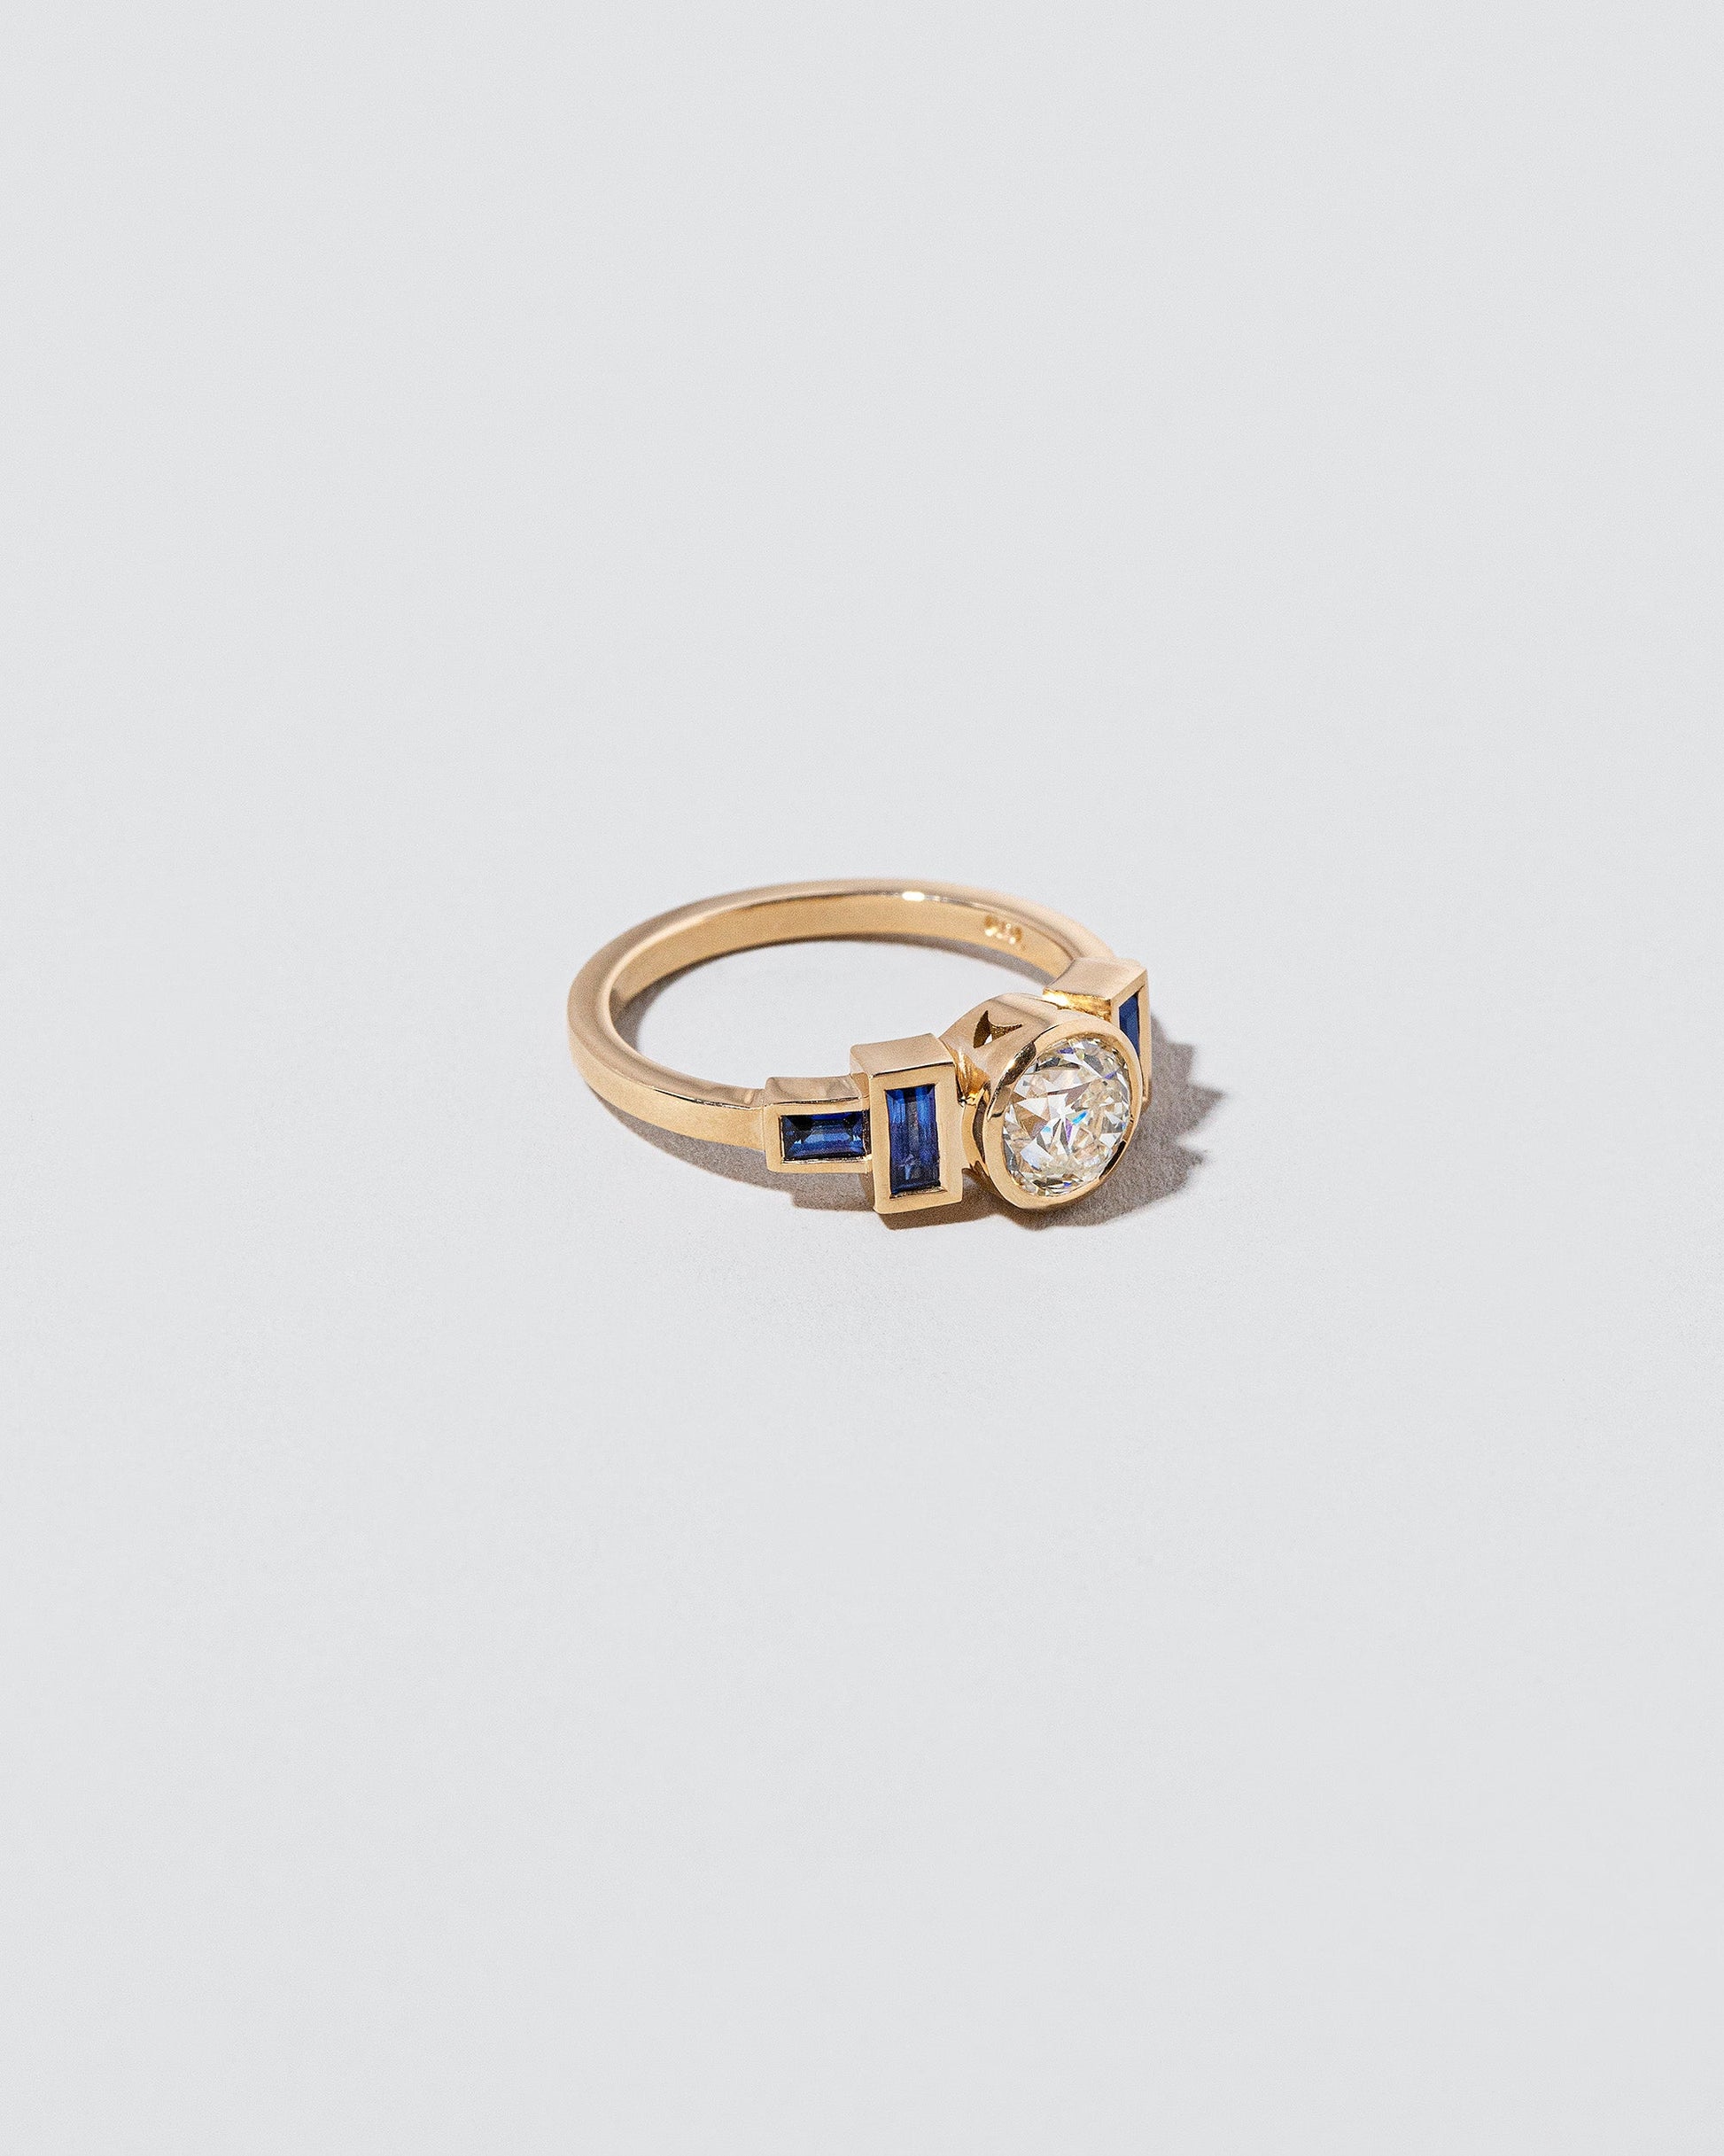  Third Eye Ring - White Diamond & Blue Sapphire on light color background.